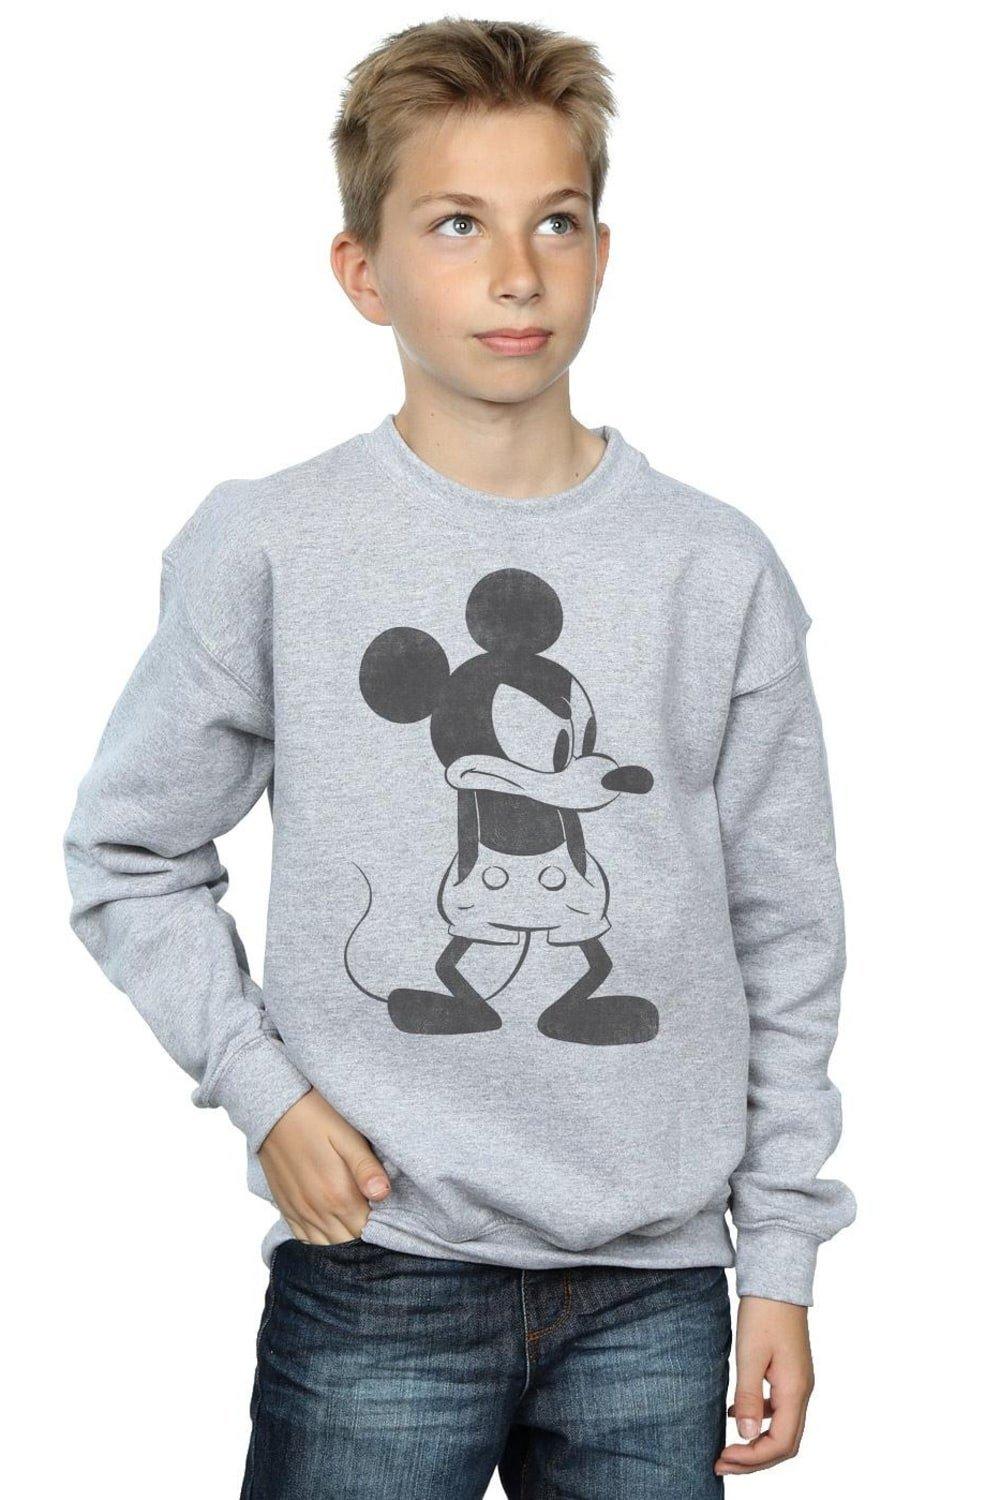 Mickey Mouse Angry Sweatshirt